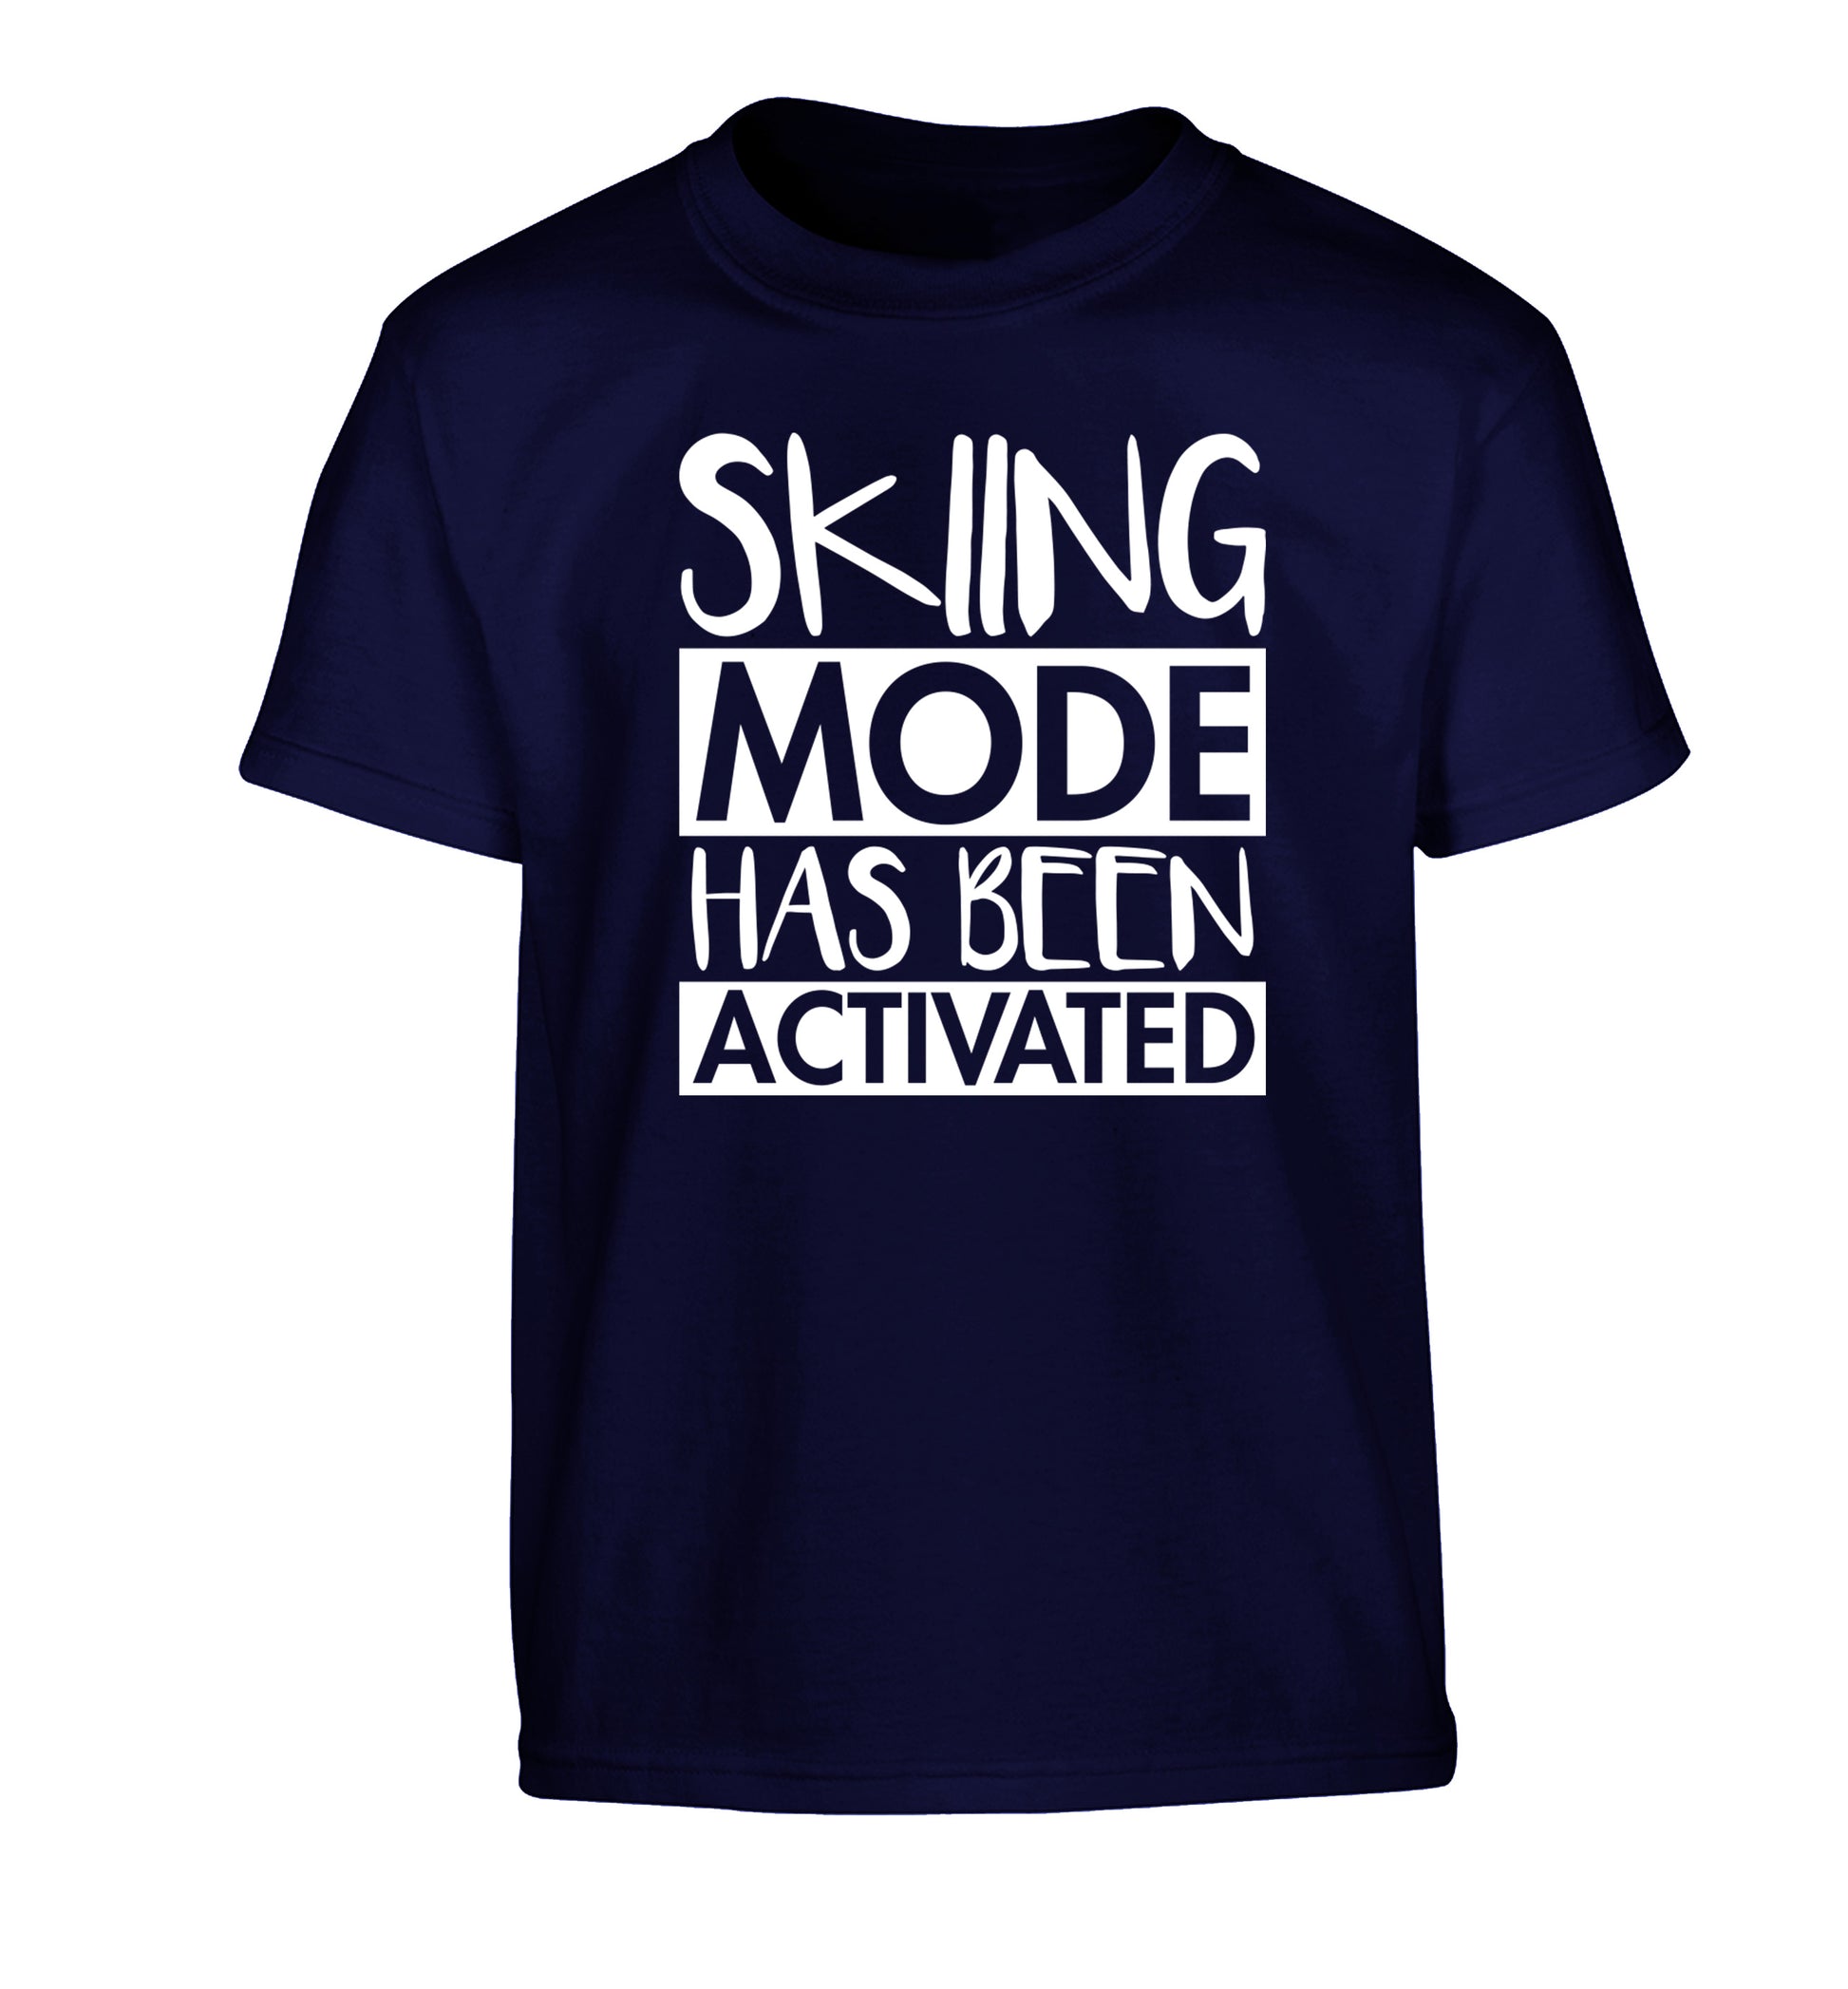 Skiing mode activated Children's navy Tshirt 12-14 Years